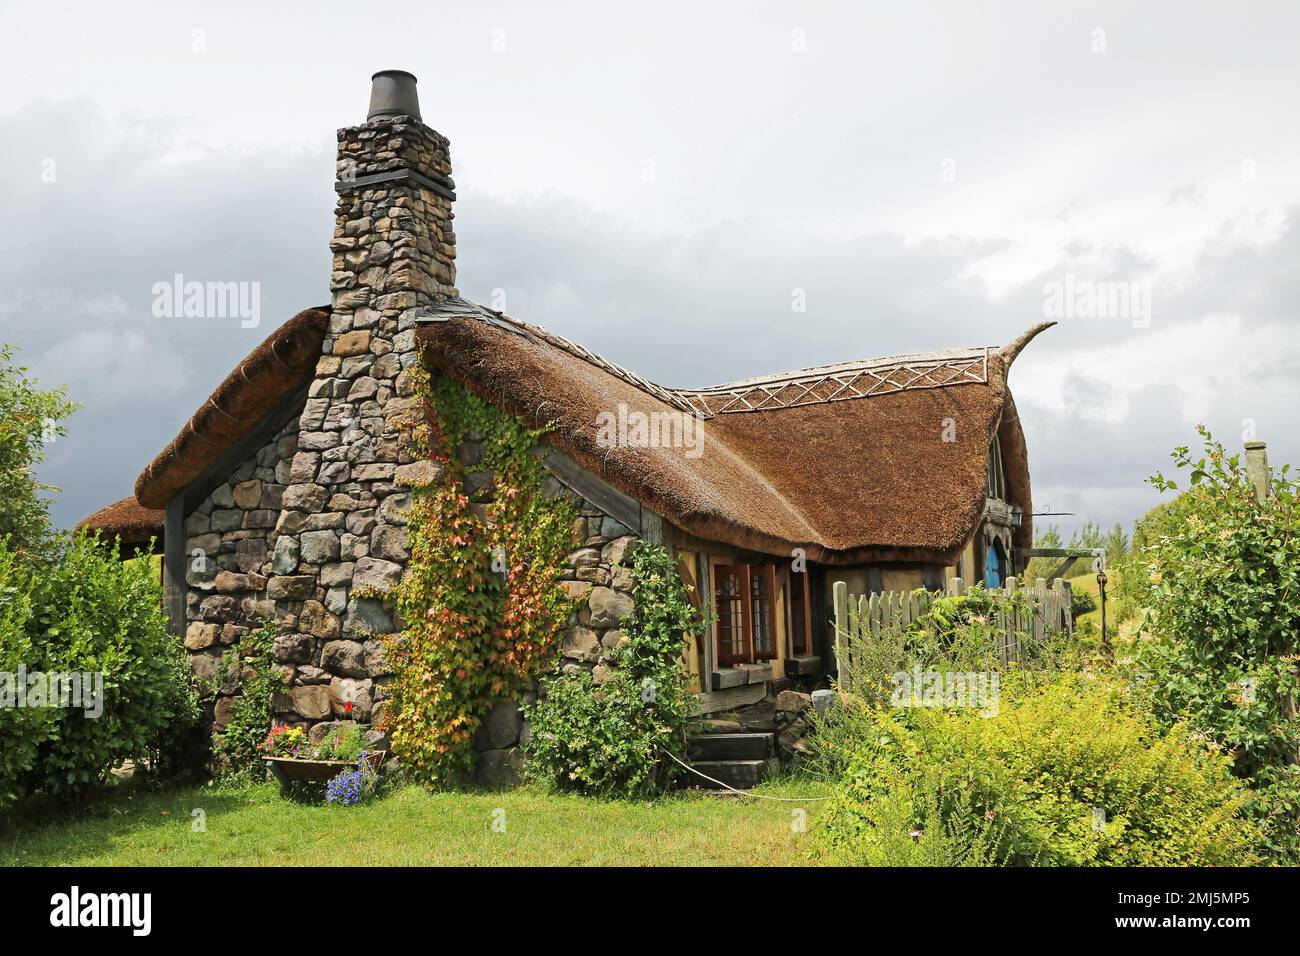 Pared de la chimenea de la casa del molino - Hobbiton - Matamata, Nueva Zelanda Foto de stock